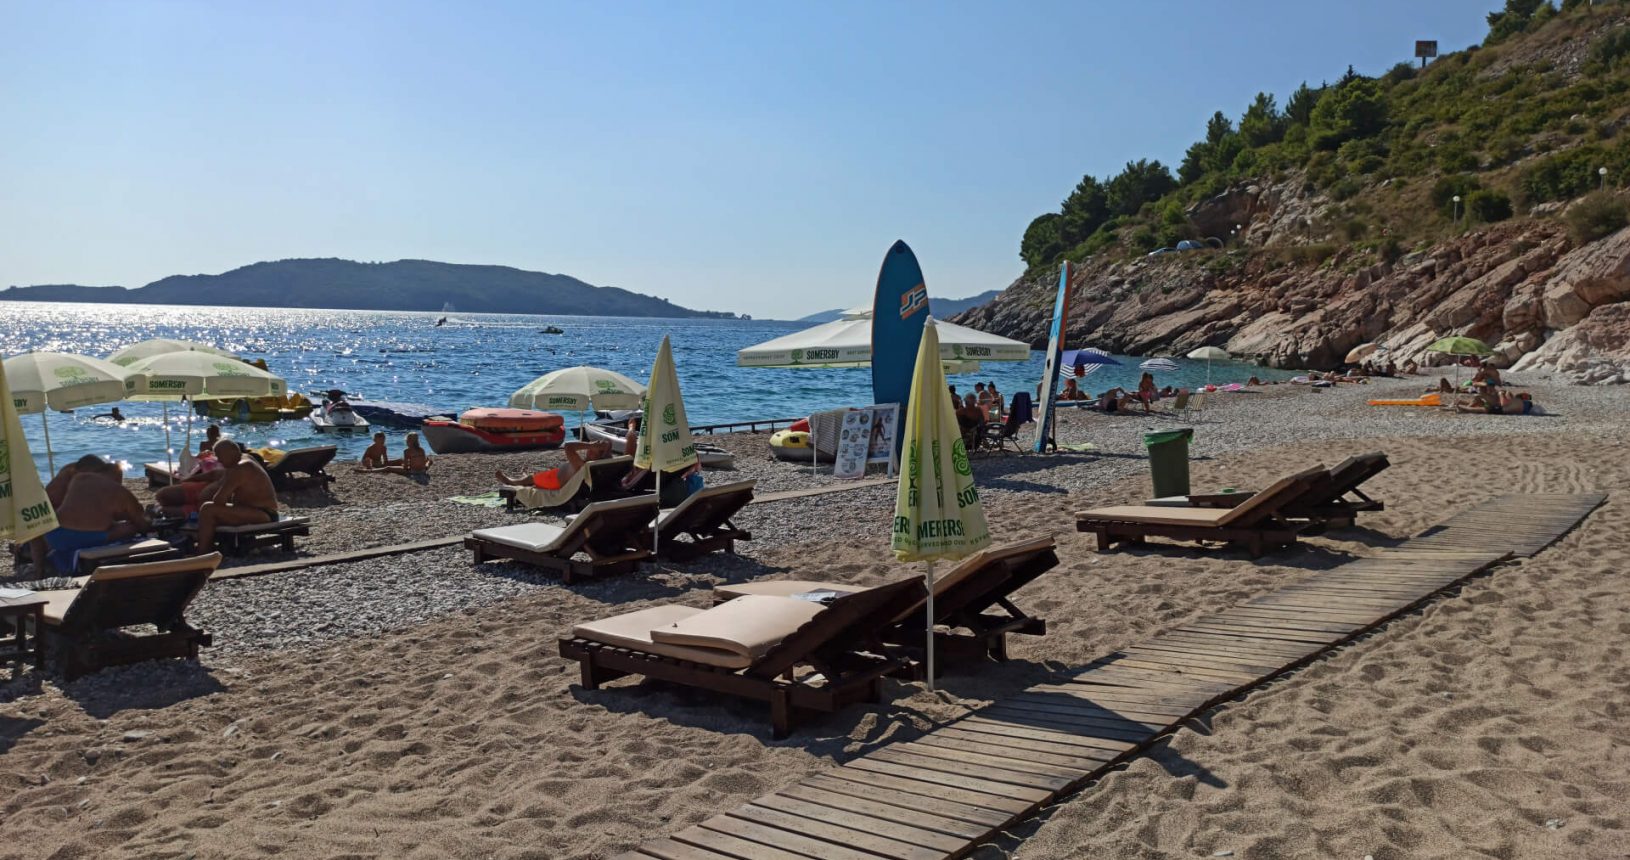 Kamenovo beach sandy and stony